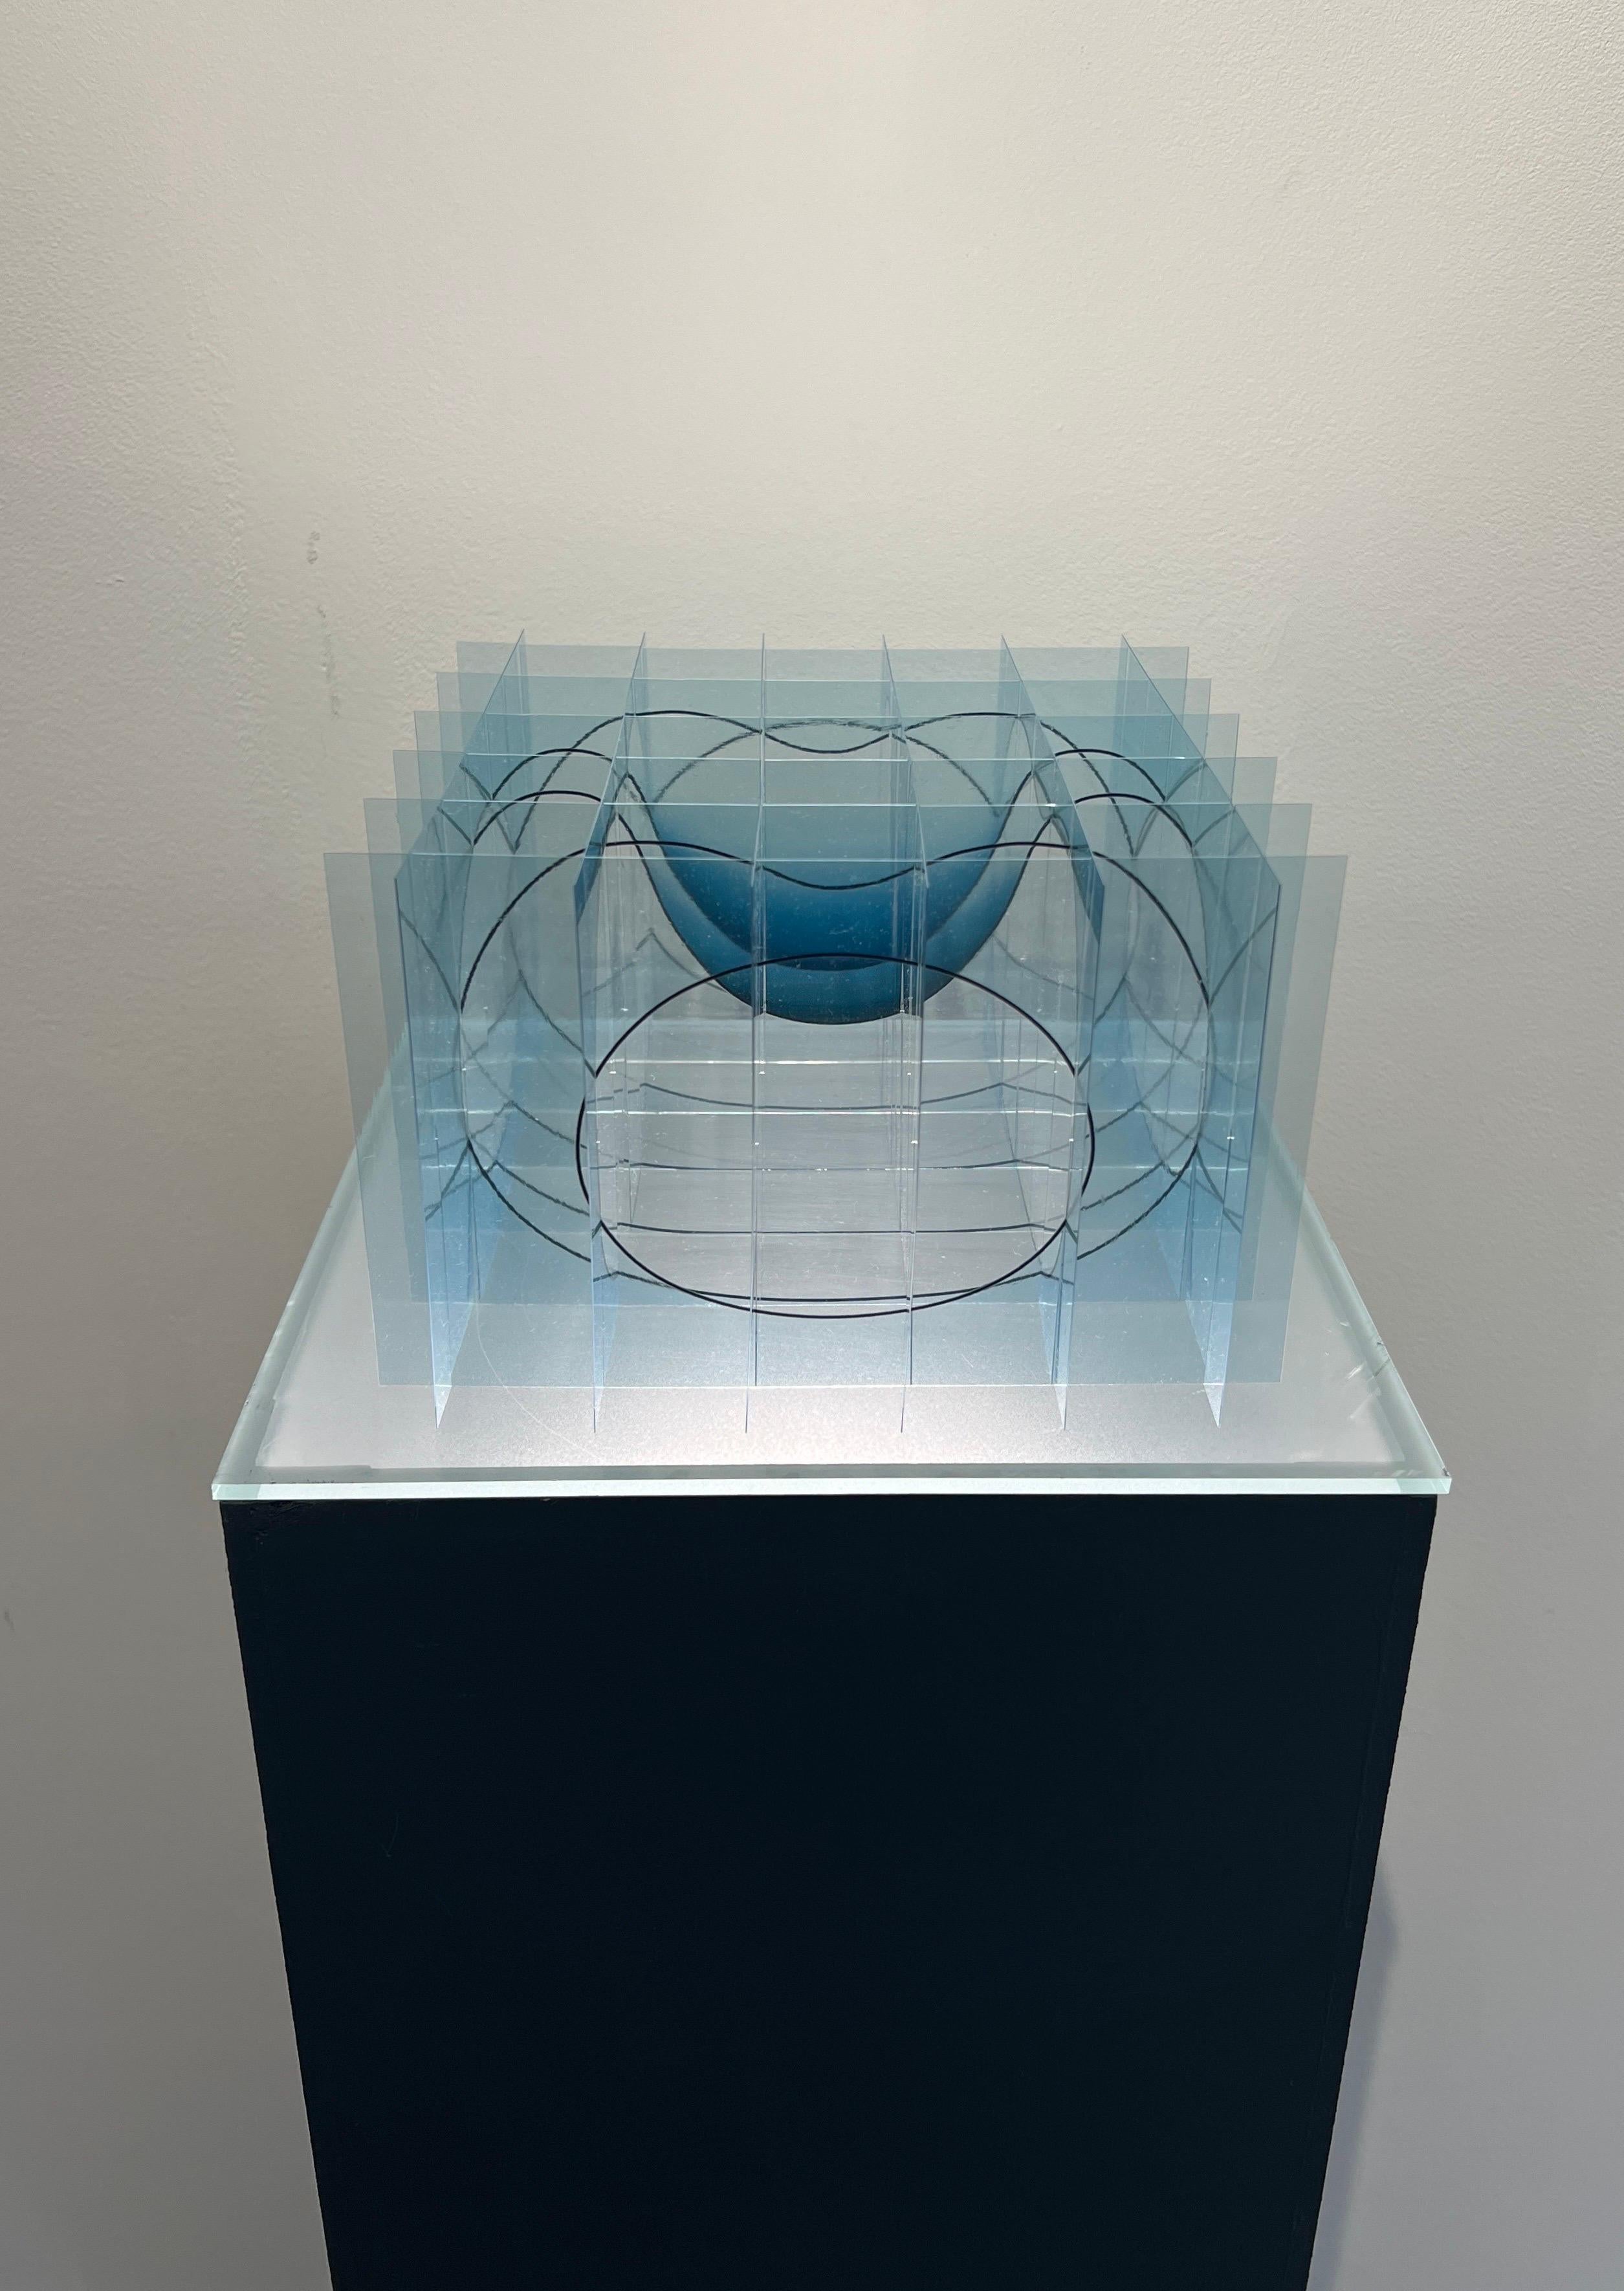 GO SEGAWA Abstract Sculpture - "Les Gouttes" dessin/volume. Origami, optical art sculpture